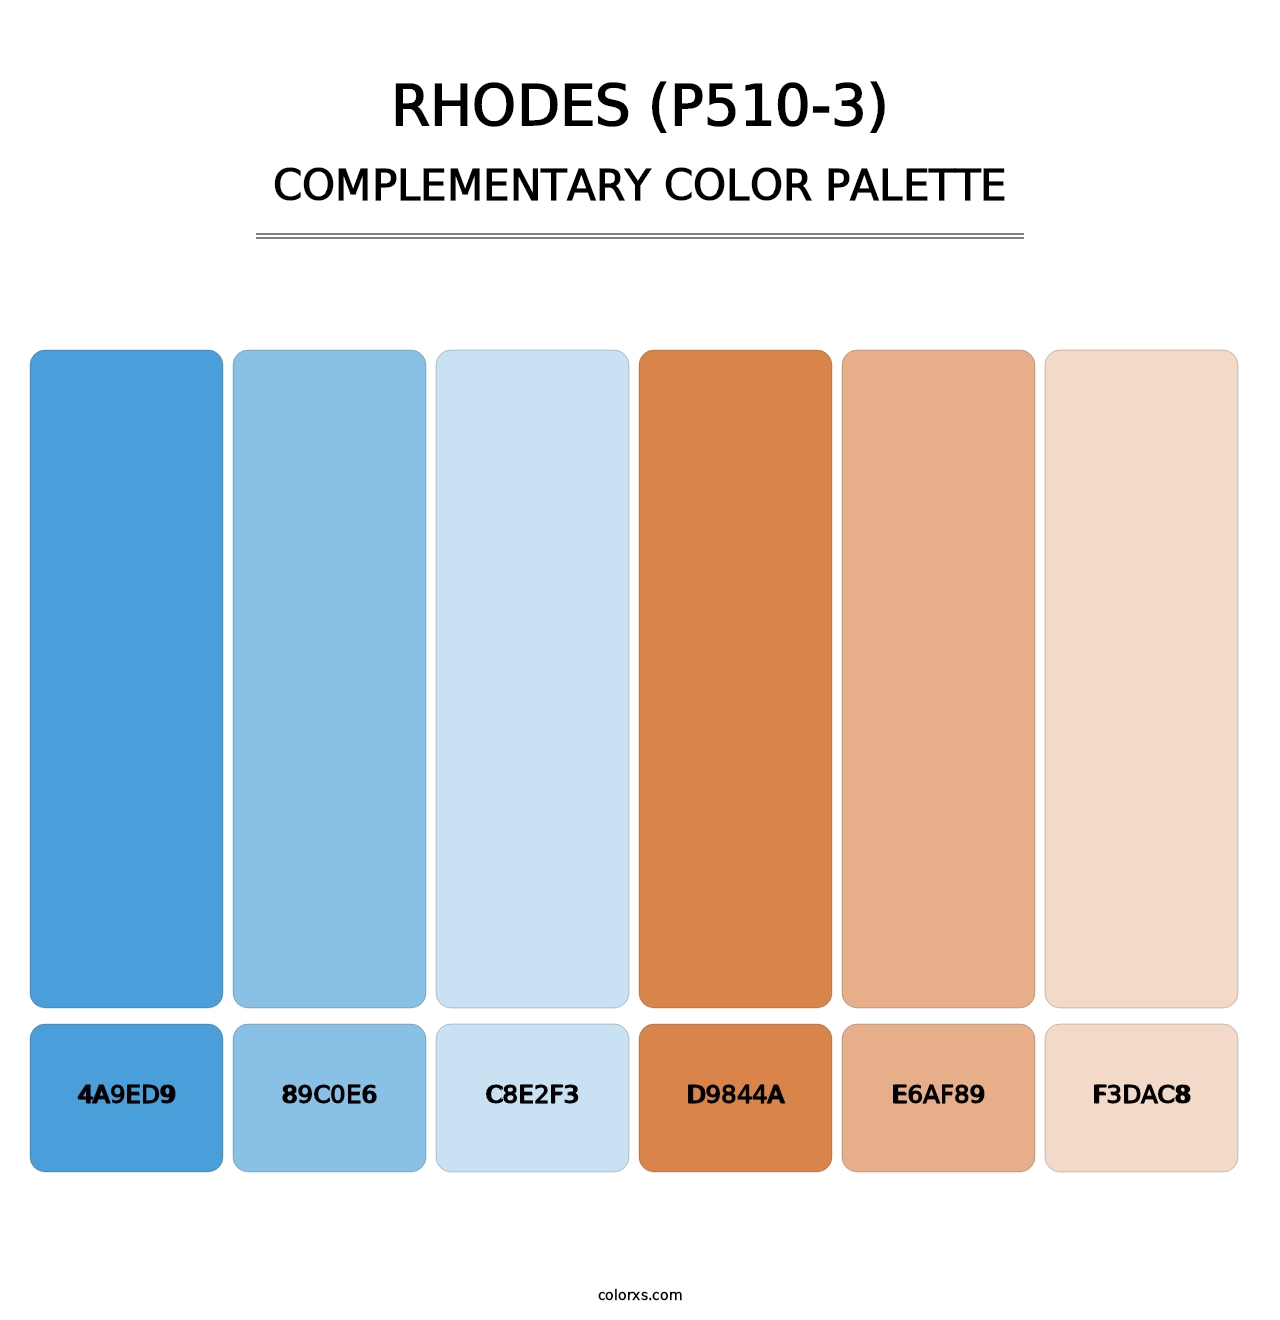 Rhodes (P510-3) - Complementary Color Palette